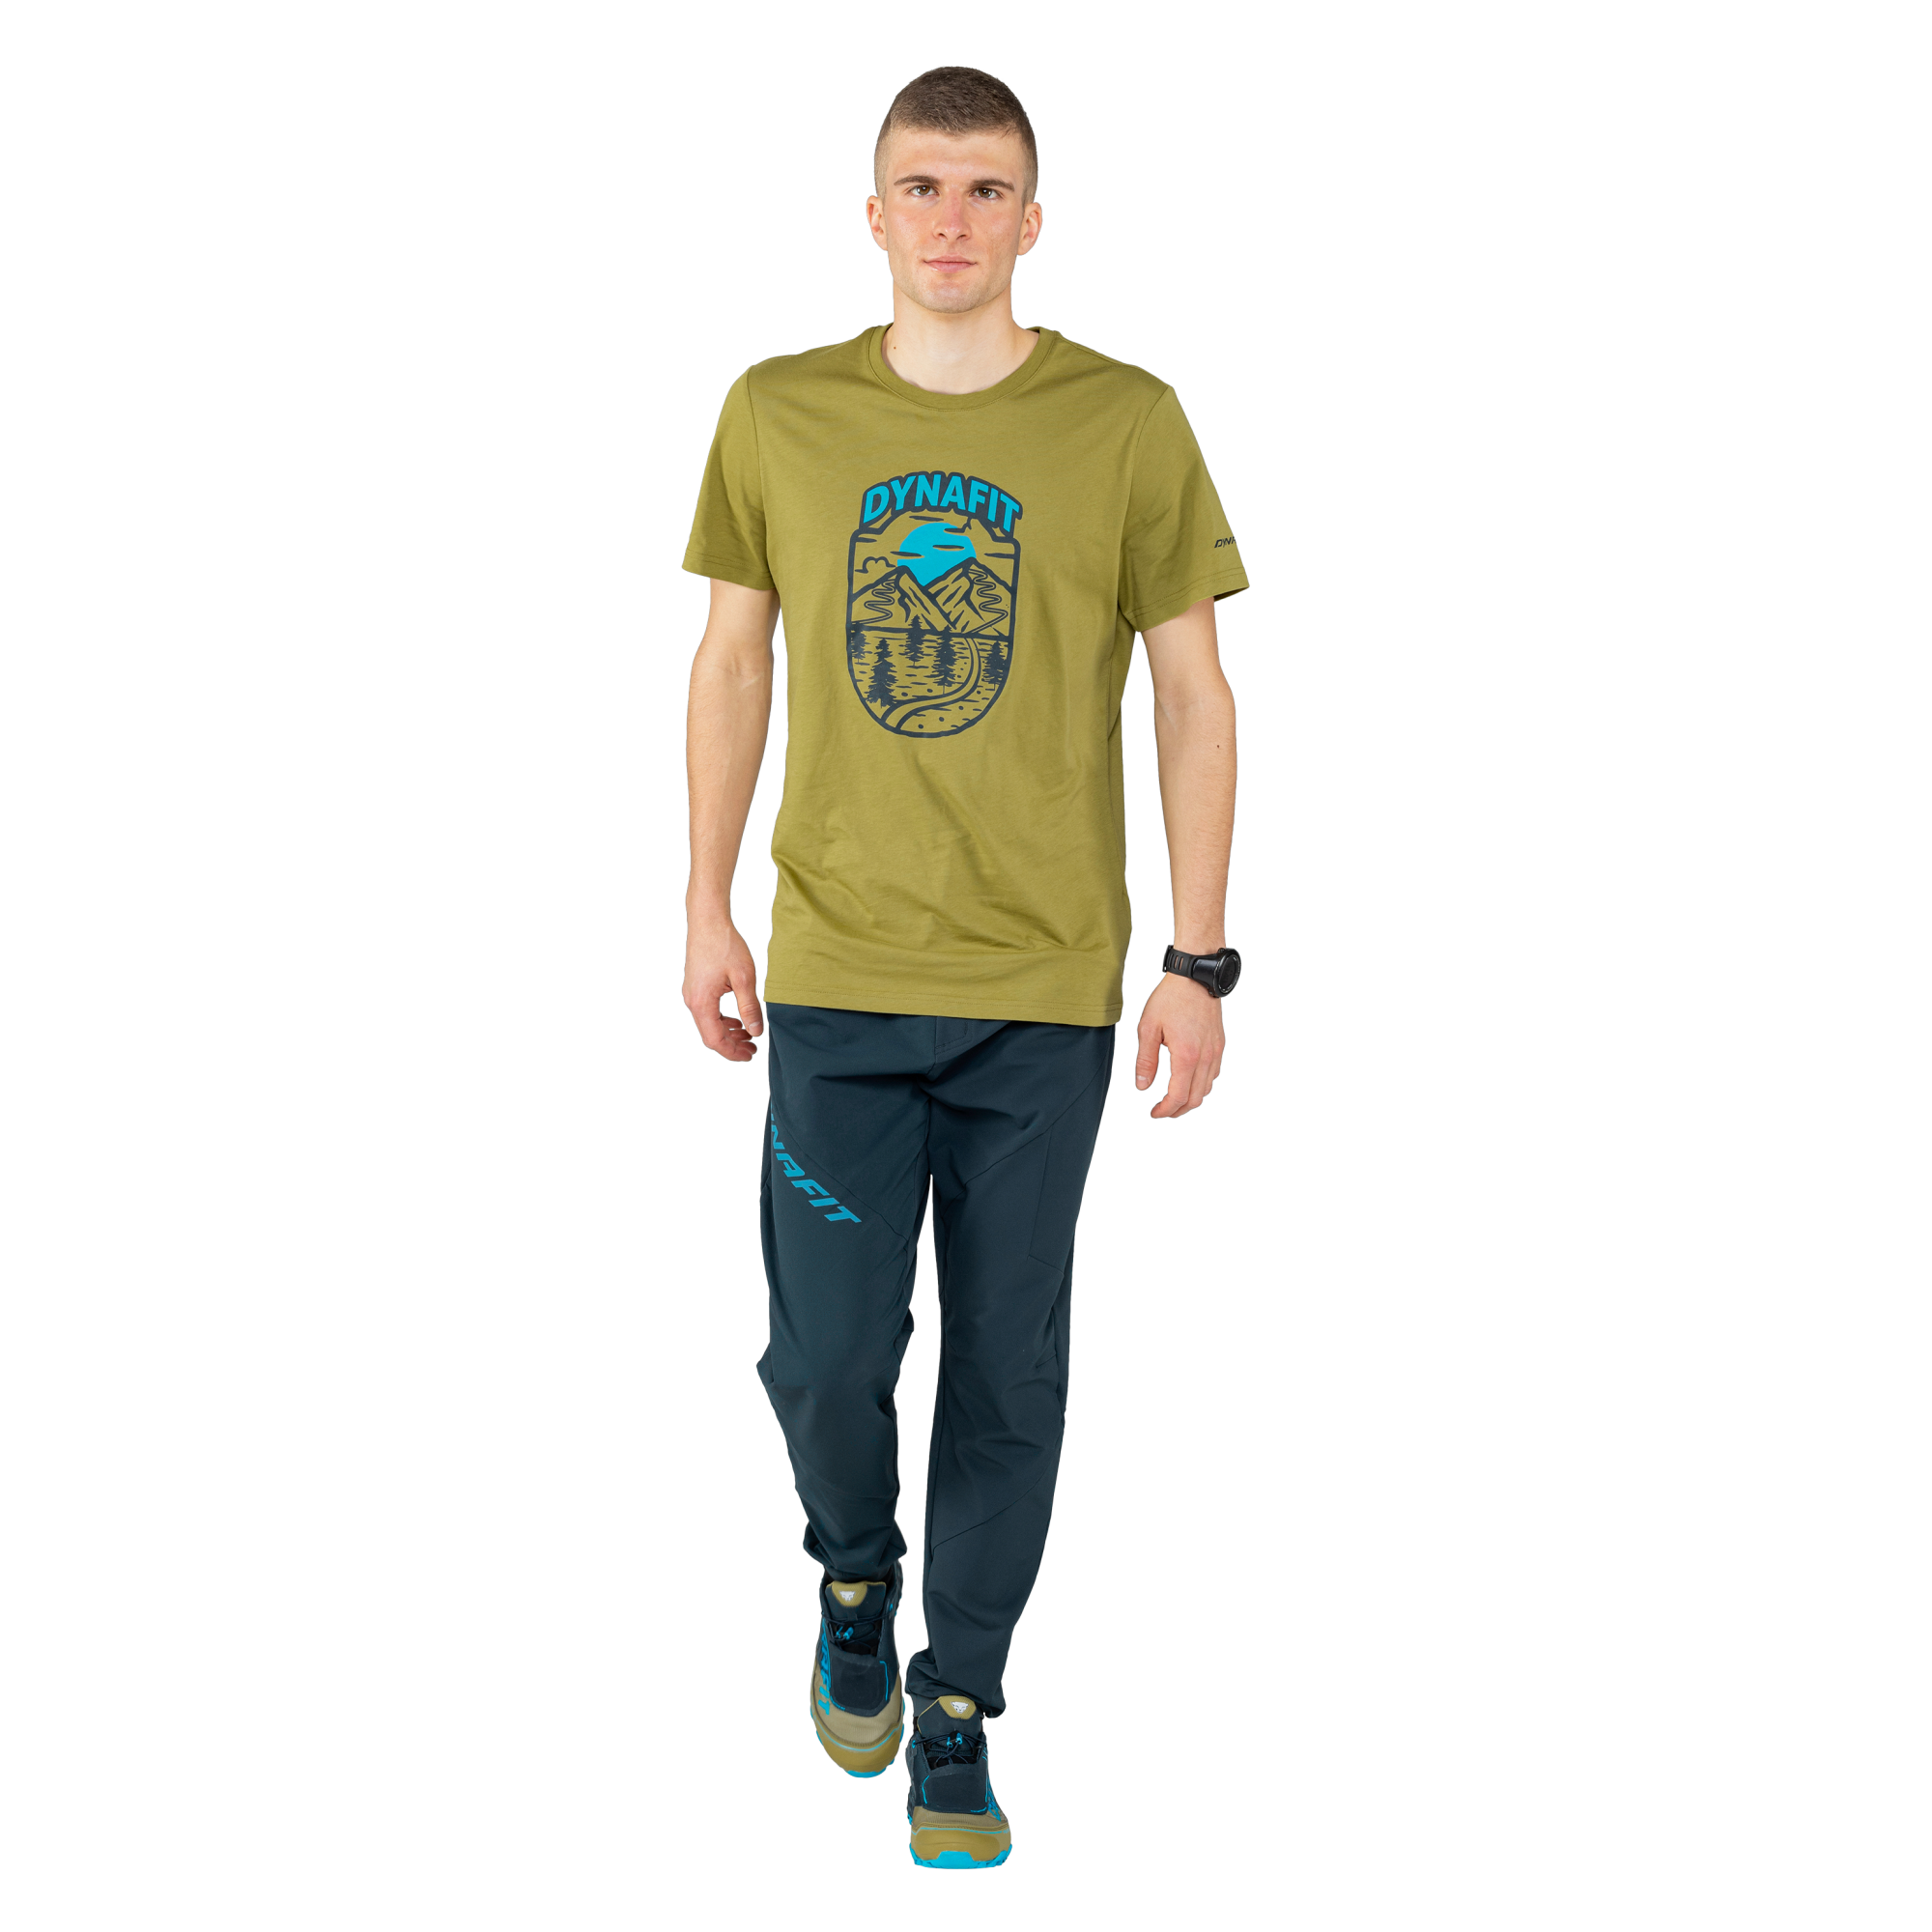 DYNAFIT Graphic Cotton T-Shirt Men Army